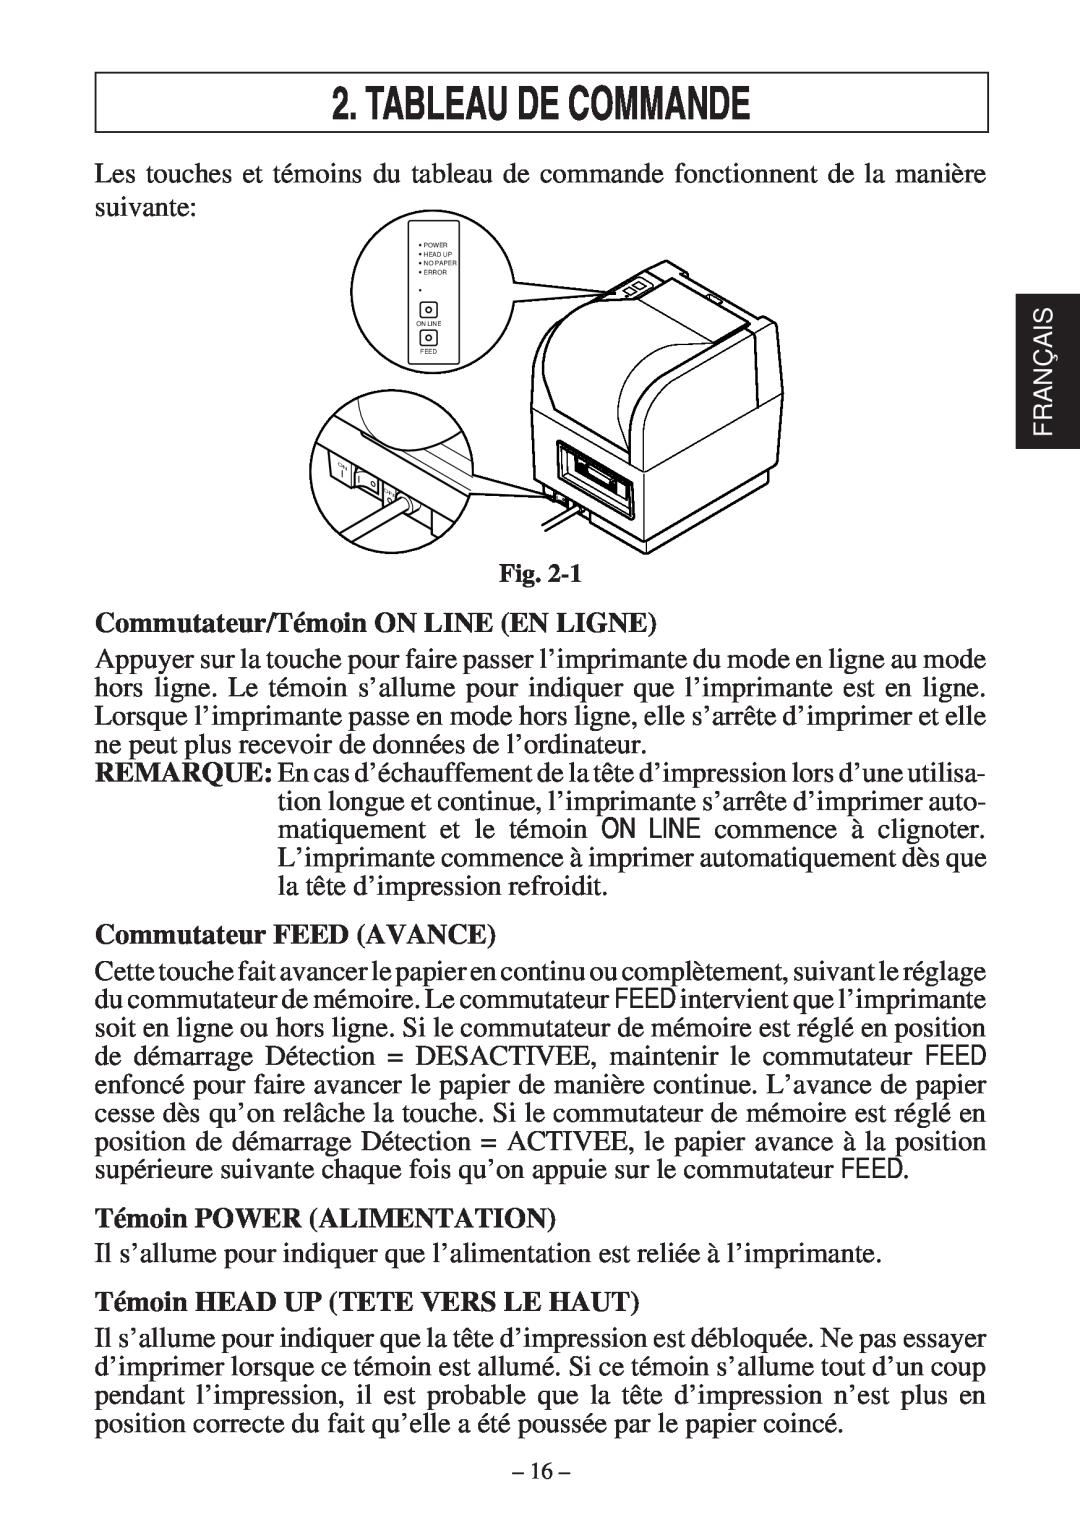 Star Micronics TSP400 Series user manual Tableau De Commande, Commutateur/Témoin ON LINE EN LIGNE, Commutateur FEED AVANCE 